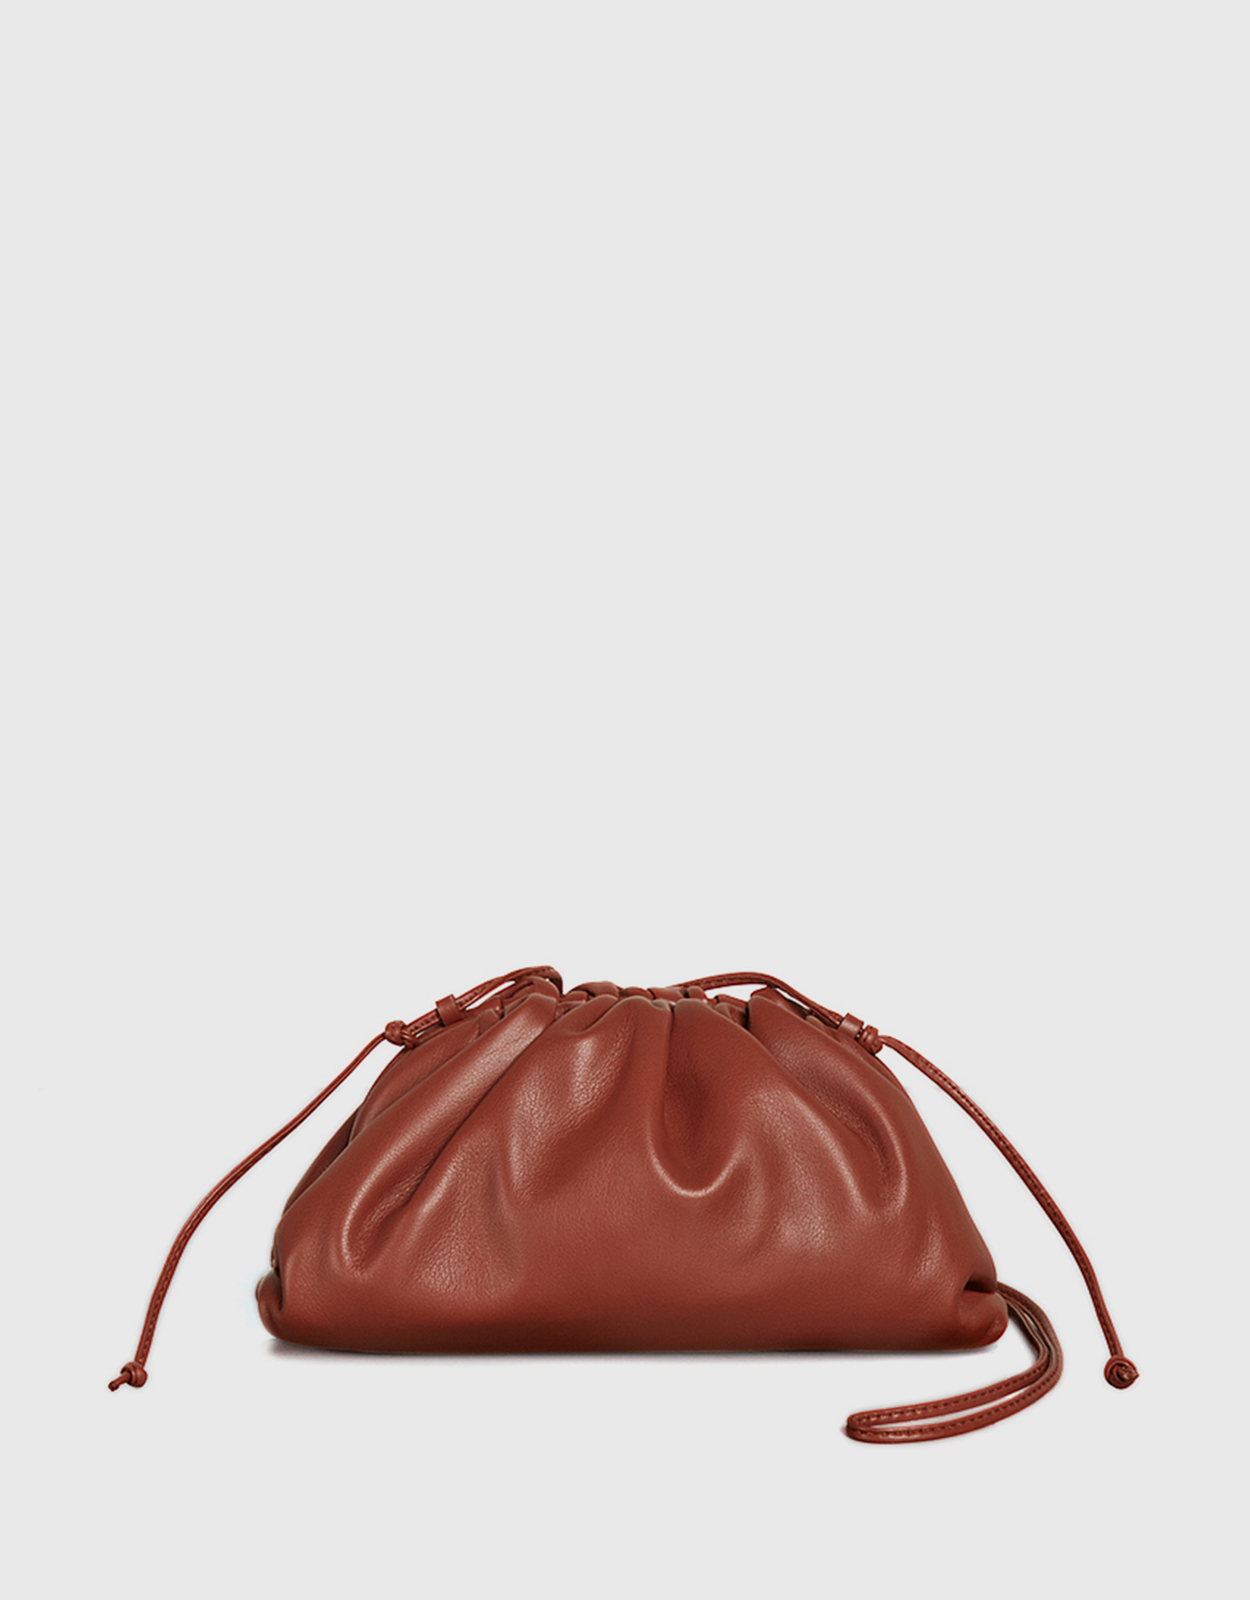 Mona B Upcycled Canvas Messenger Crossbody Bag with Stylish Design for